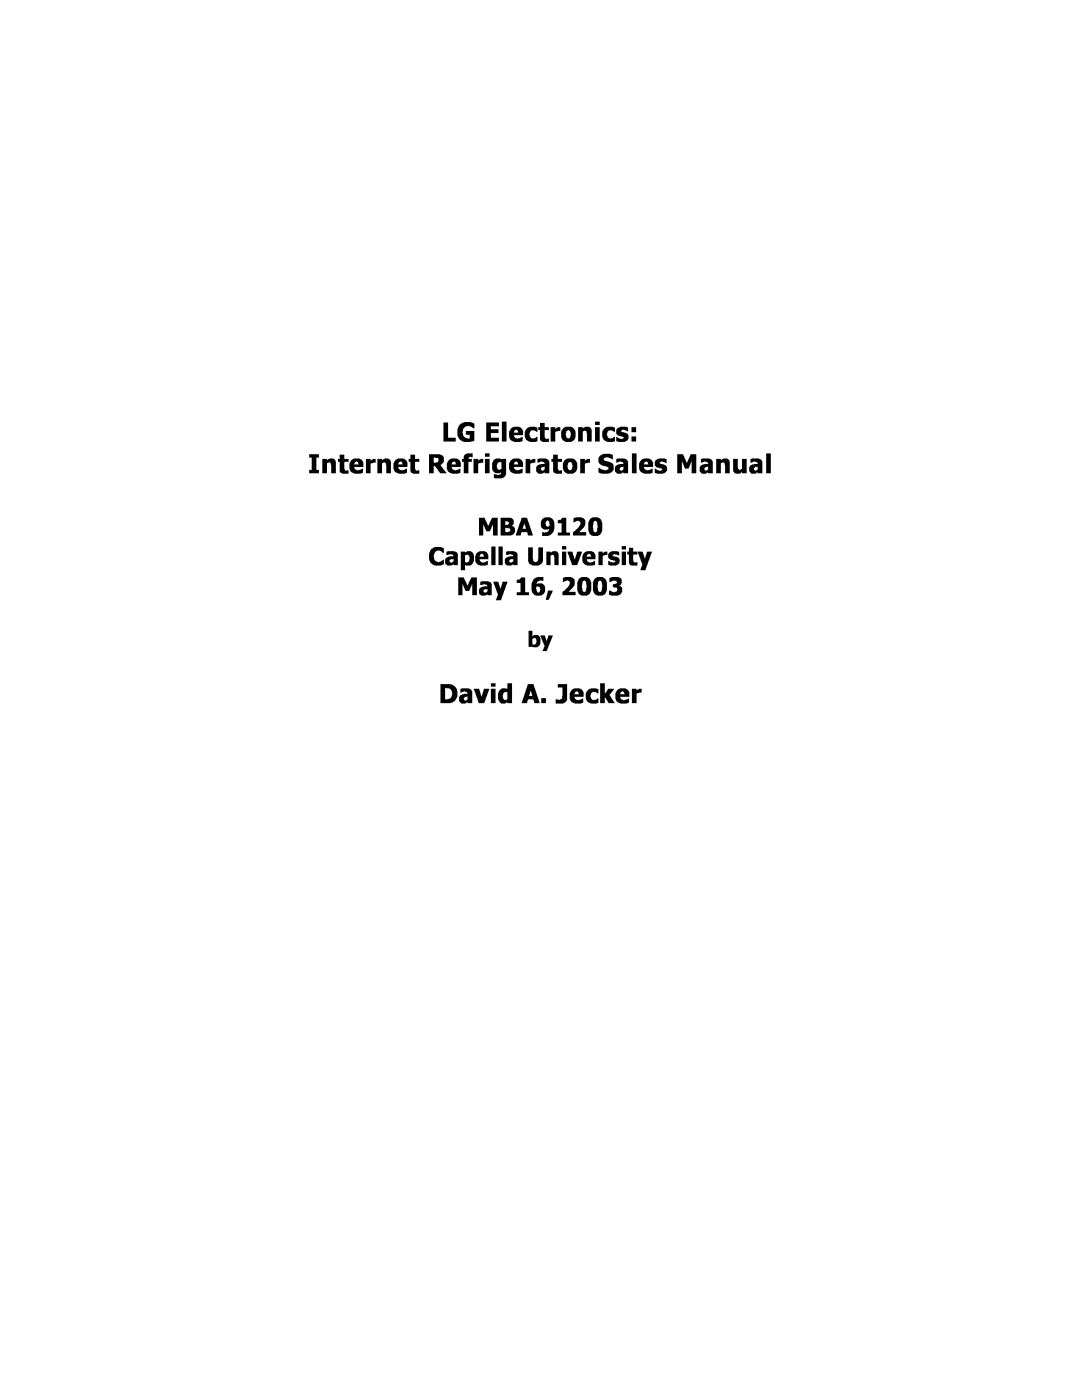 LG Electronics MBA 9120 manual LG Electronics Internet Refrigerator Sales Manual, David A. Jecker 